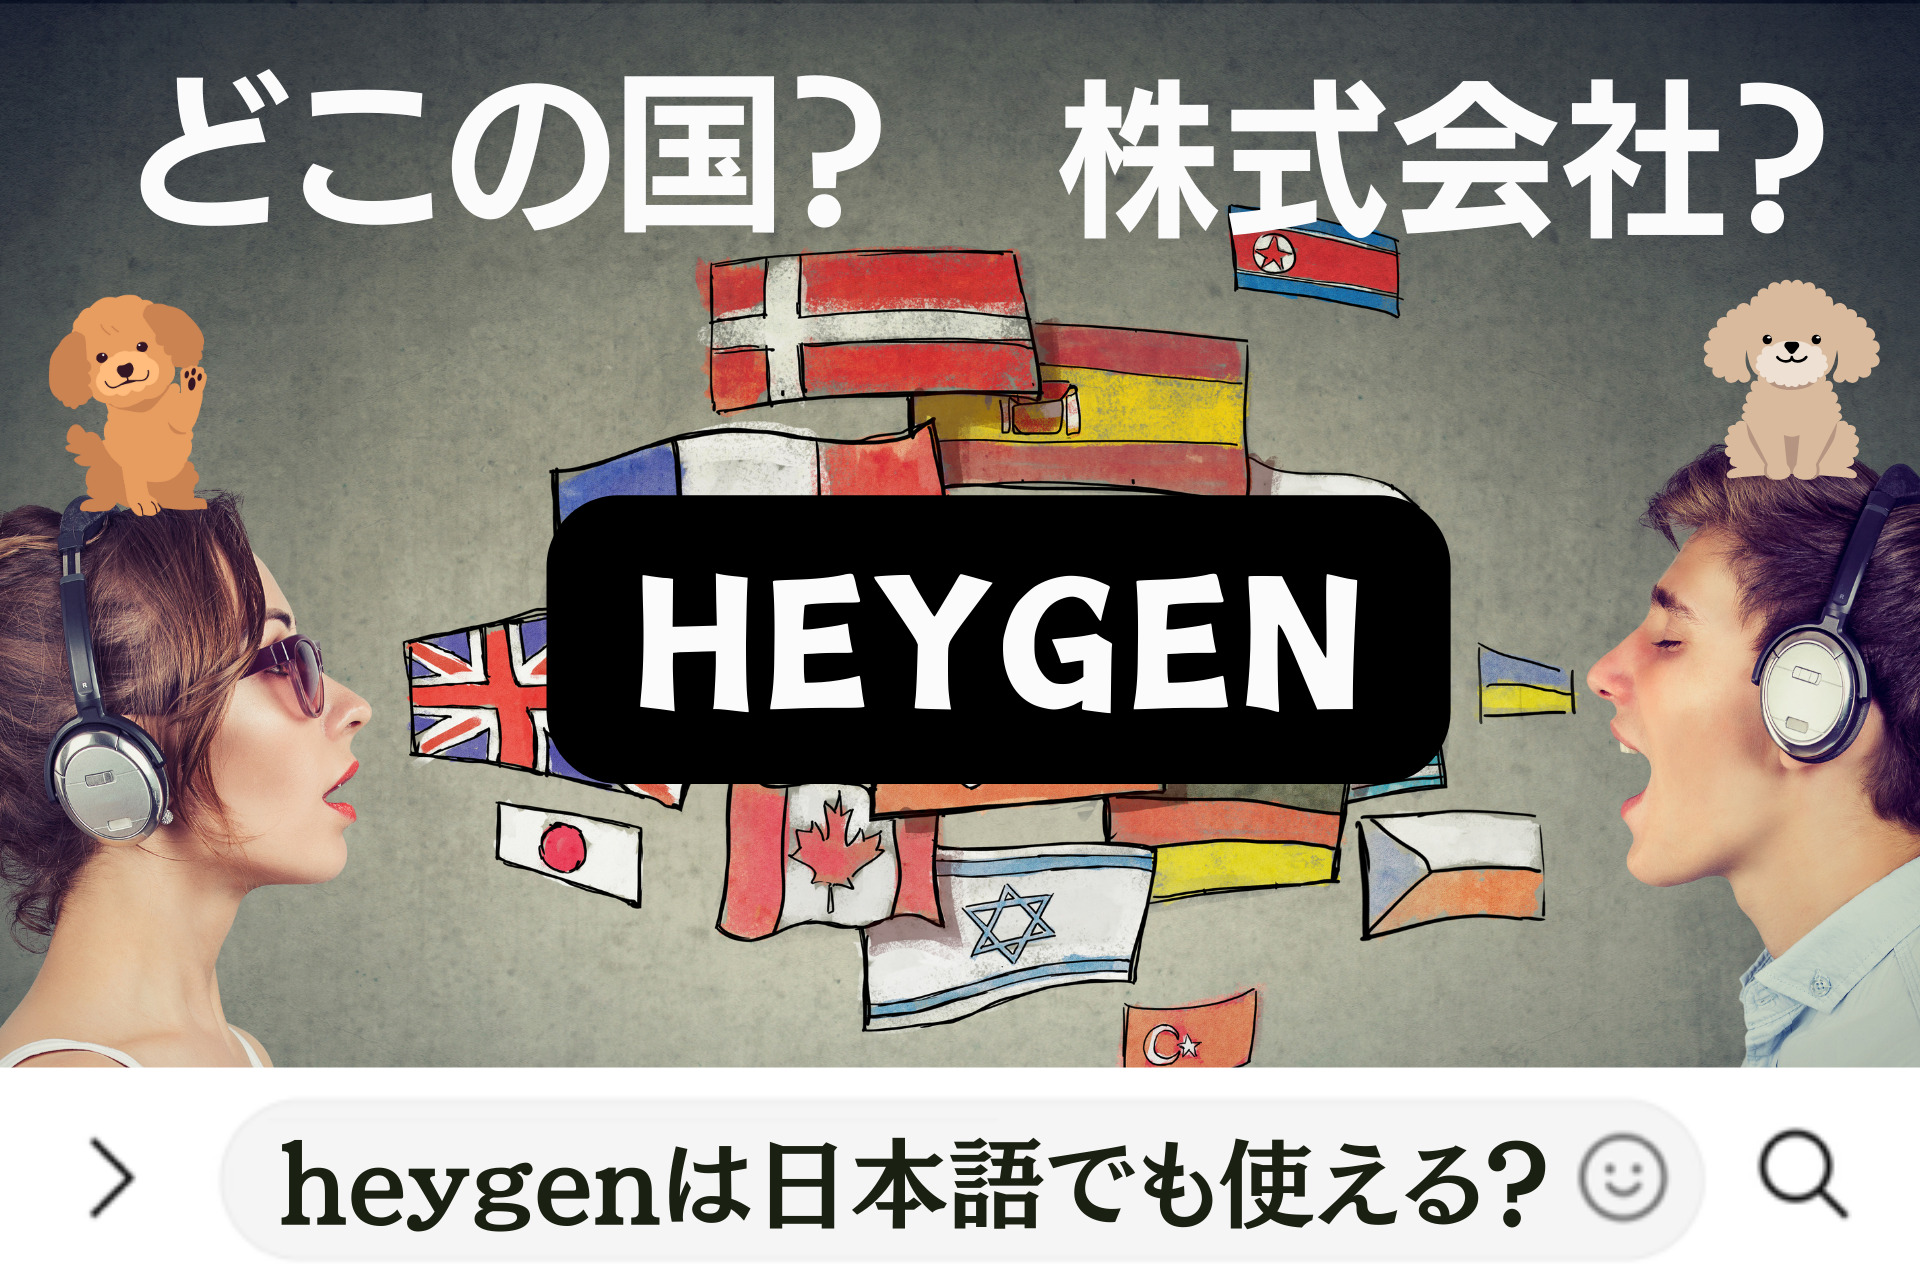 heygenは日本語でも使える？どこの国？株式会社？